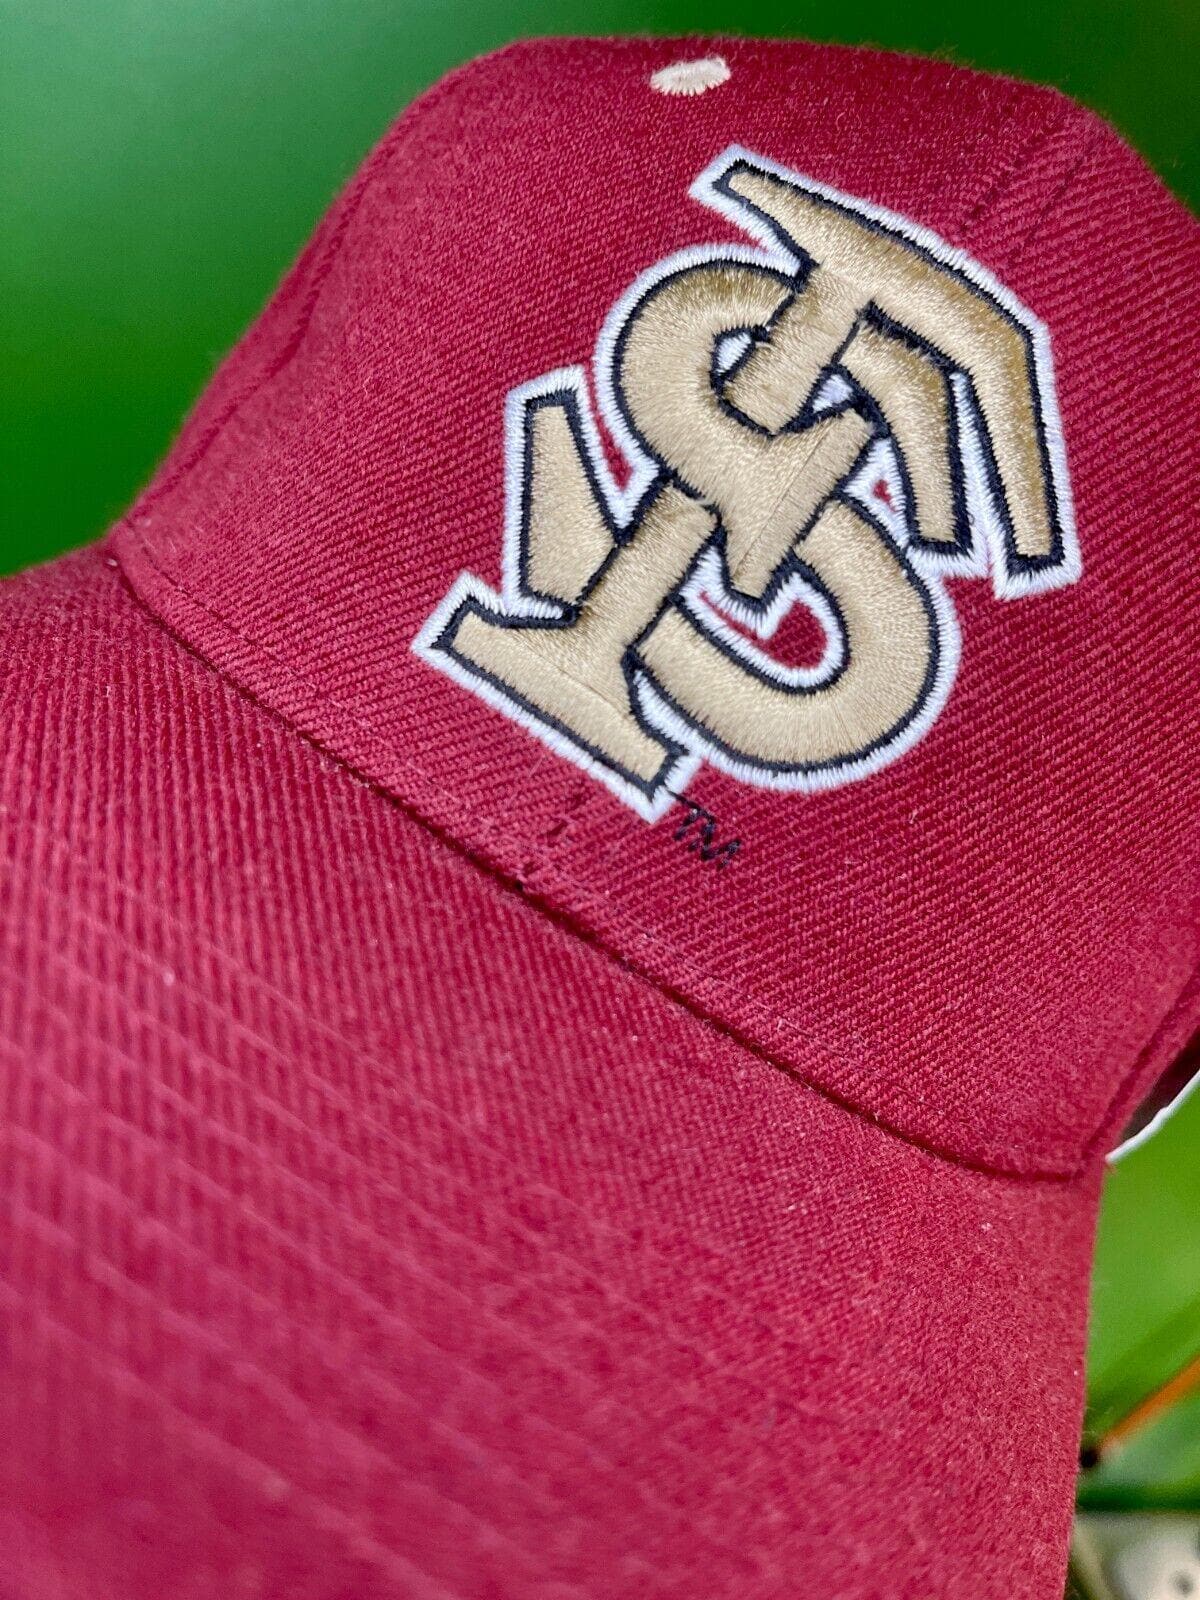 NCAA Florida State Seminoles Zephyr Hat/Cap Size 7-1/4